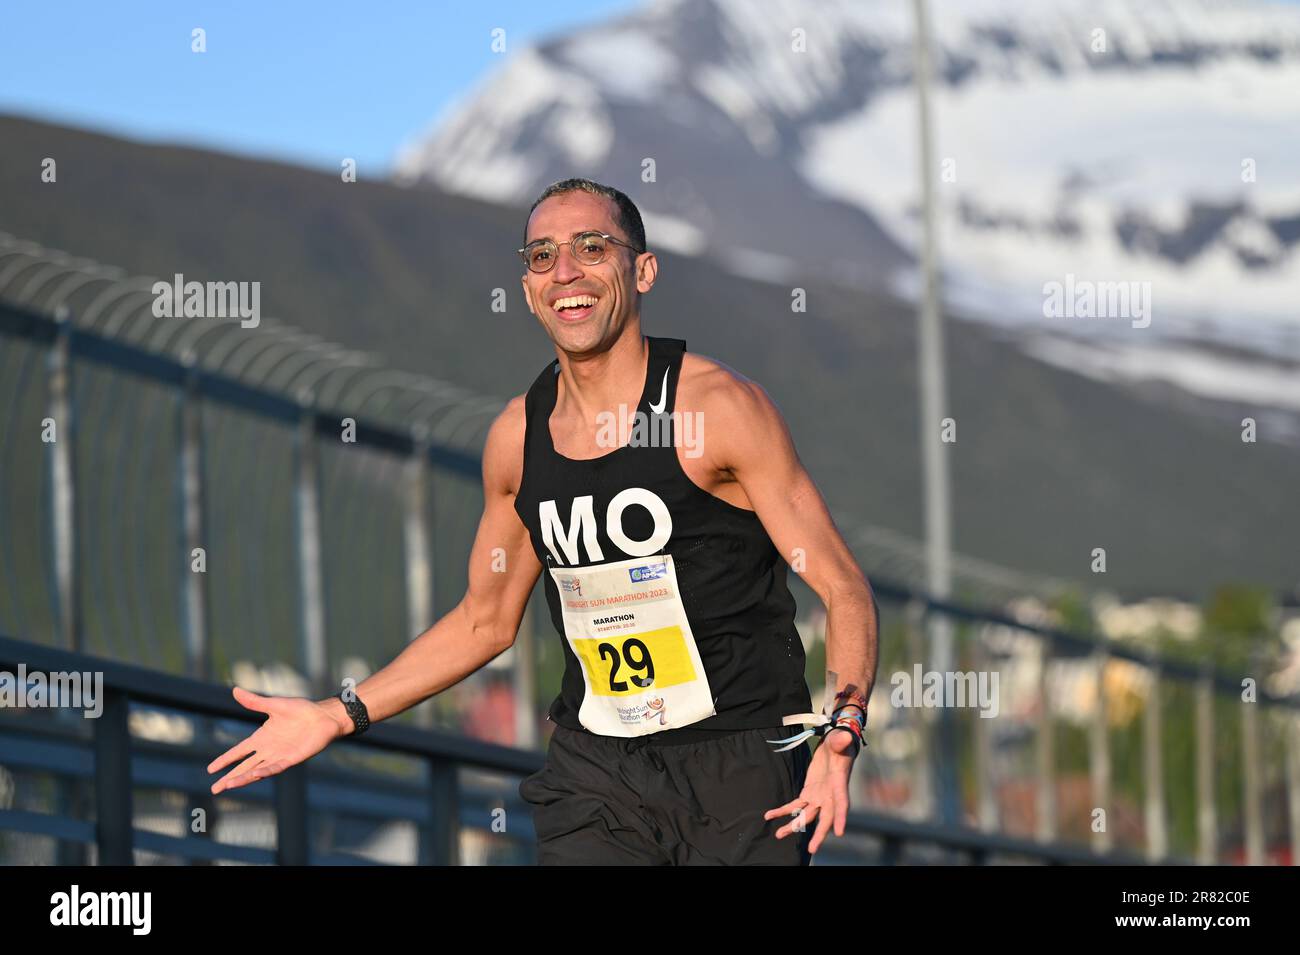 Marathon Race ARCHIVED RACE: Midnight Sun Marathon @ Tromsoe, Tromsø,  Troms, Norway on 22 June 2013 - Race Calendar Running